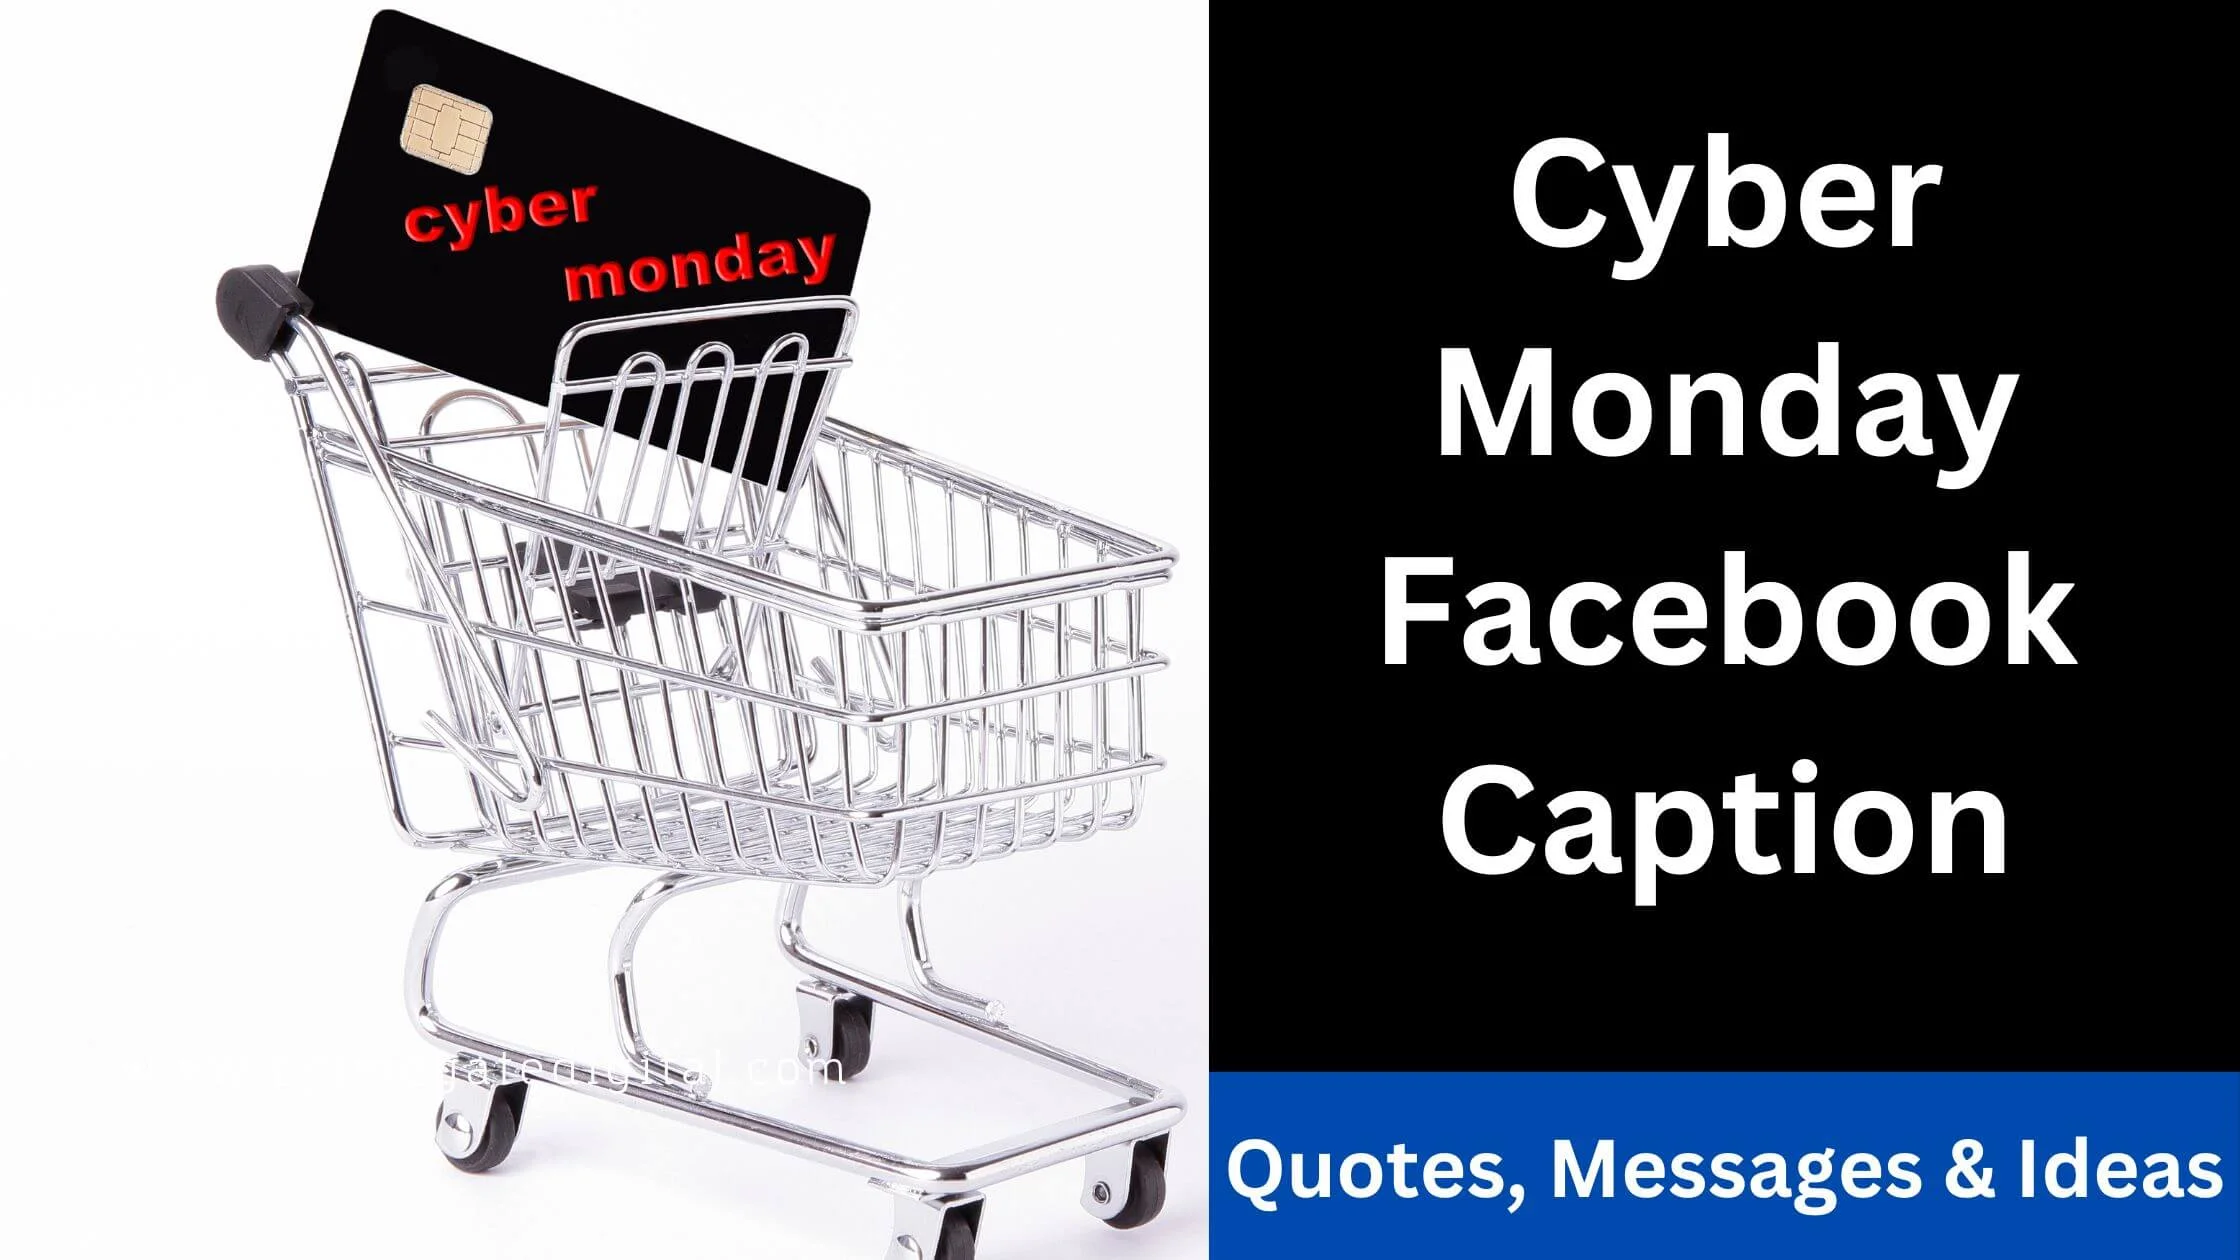 Cyber Monday Facebook Caption